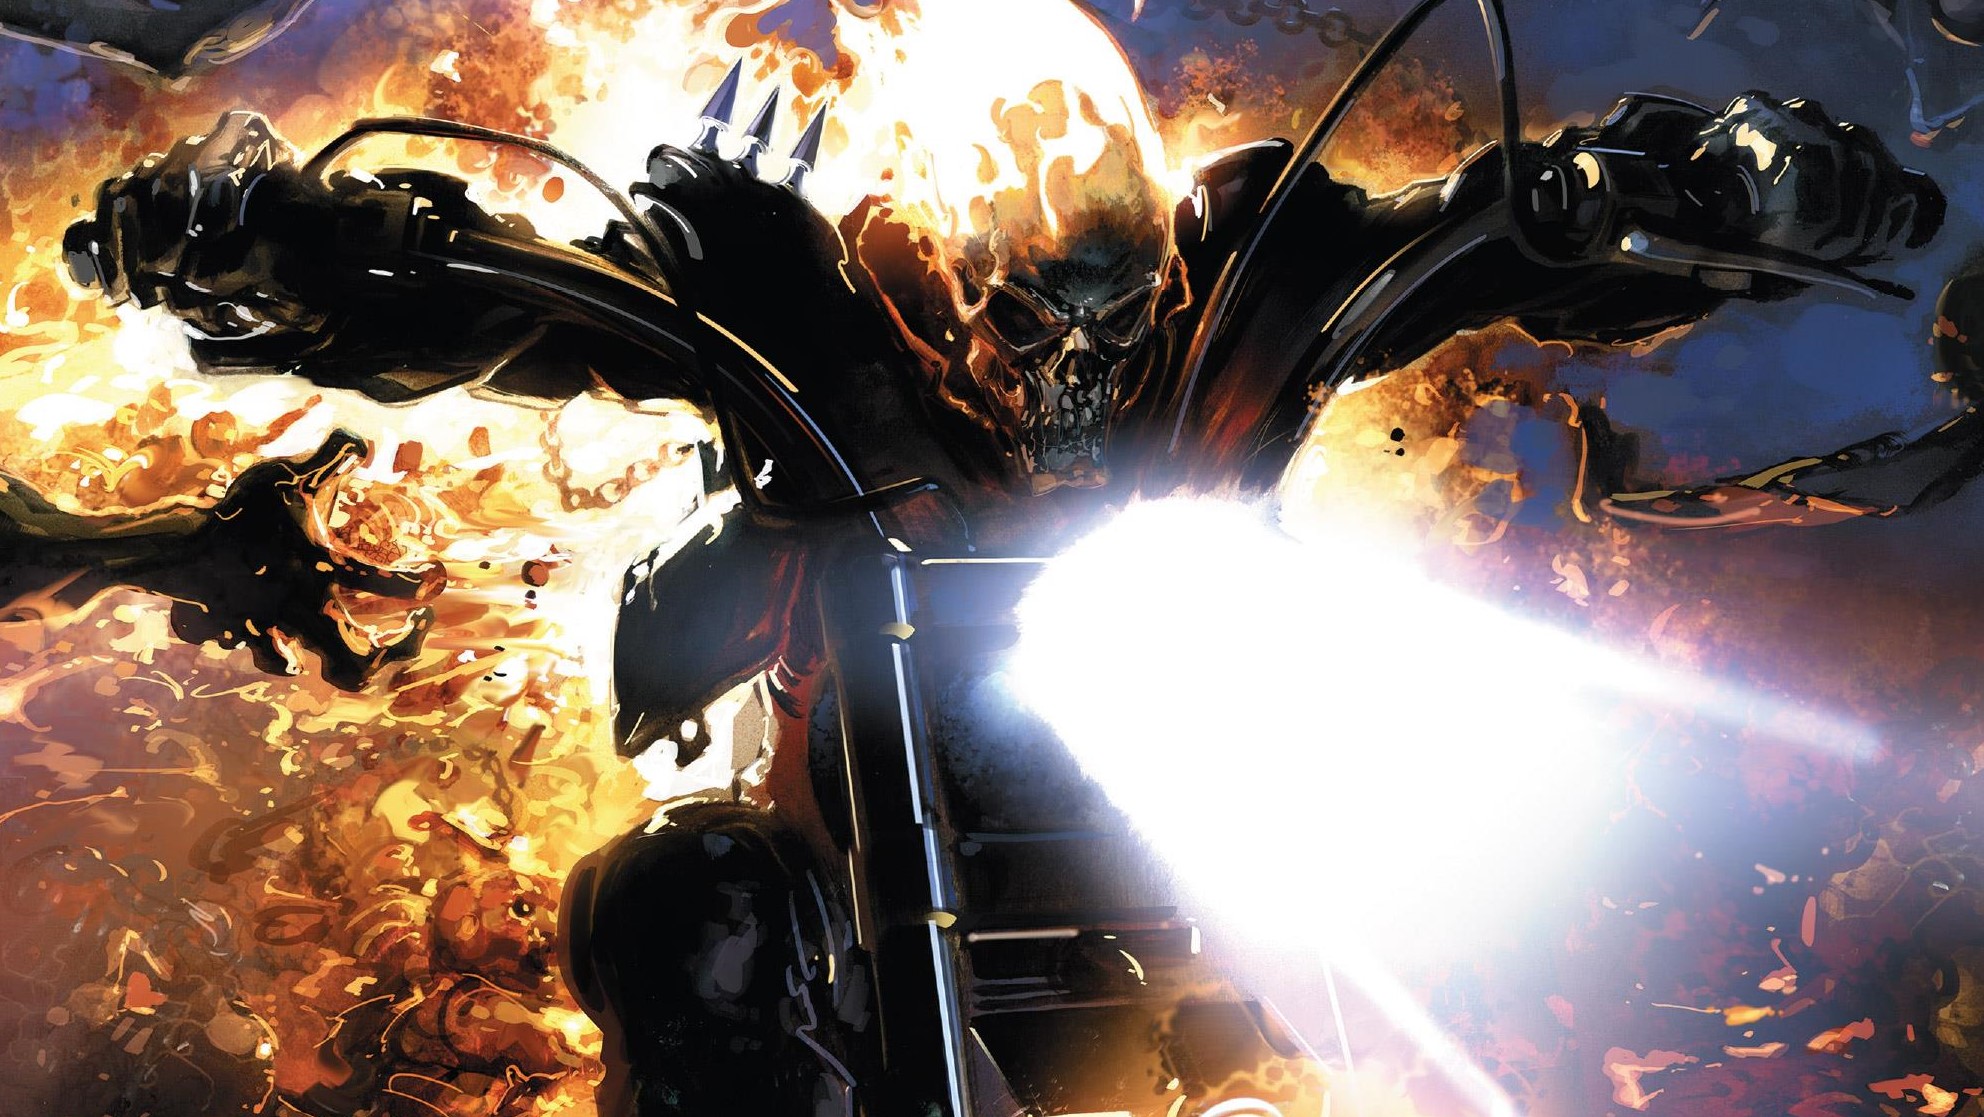 Comics Comic Art Marvel Comics Ghost Rider Fire Motorcycle Driver Skull 1984x1117